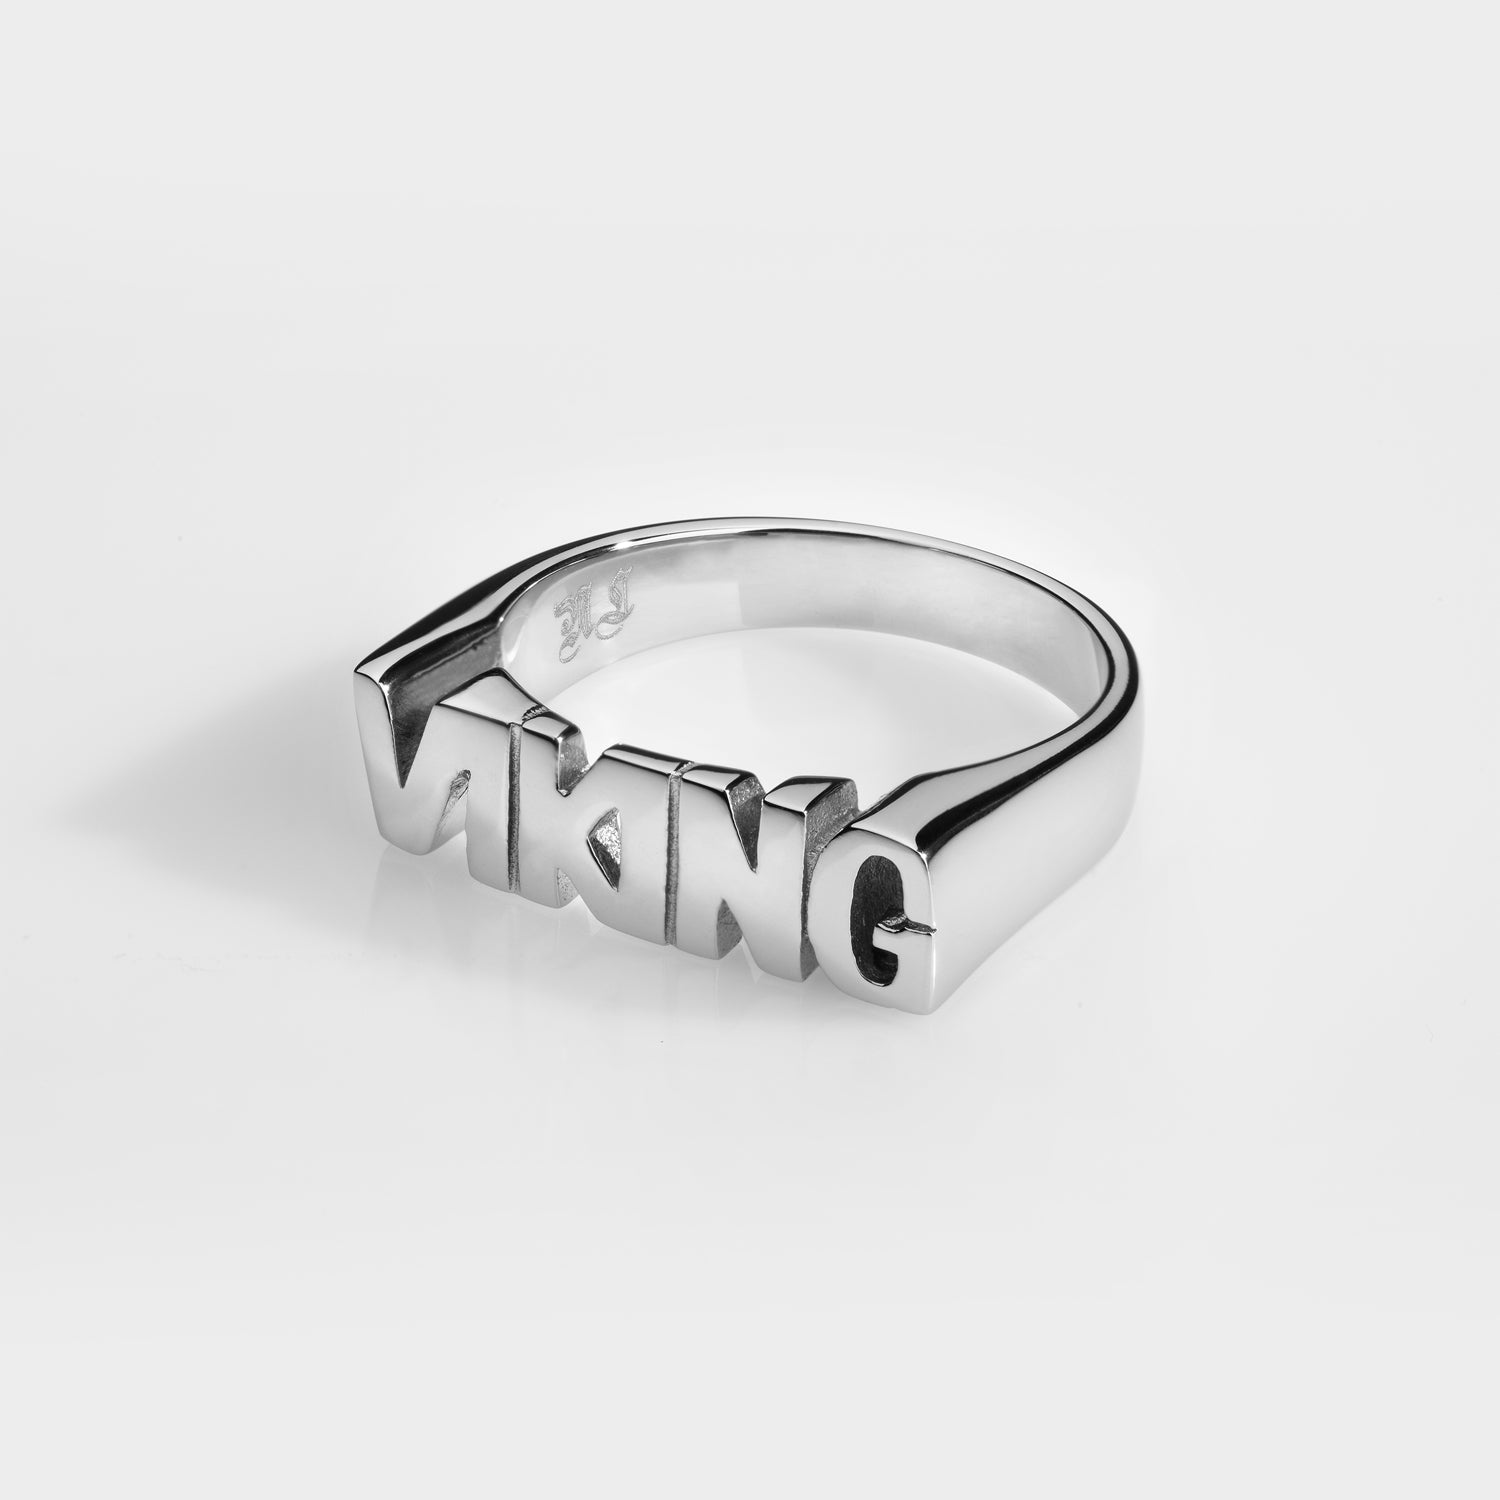 VIKING Signature - Silver-toned ring